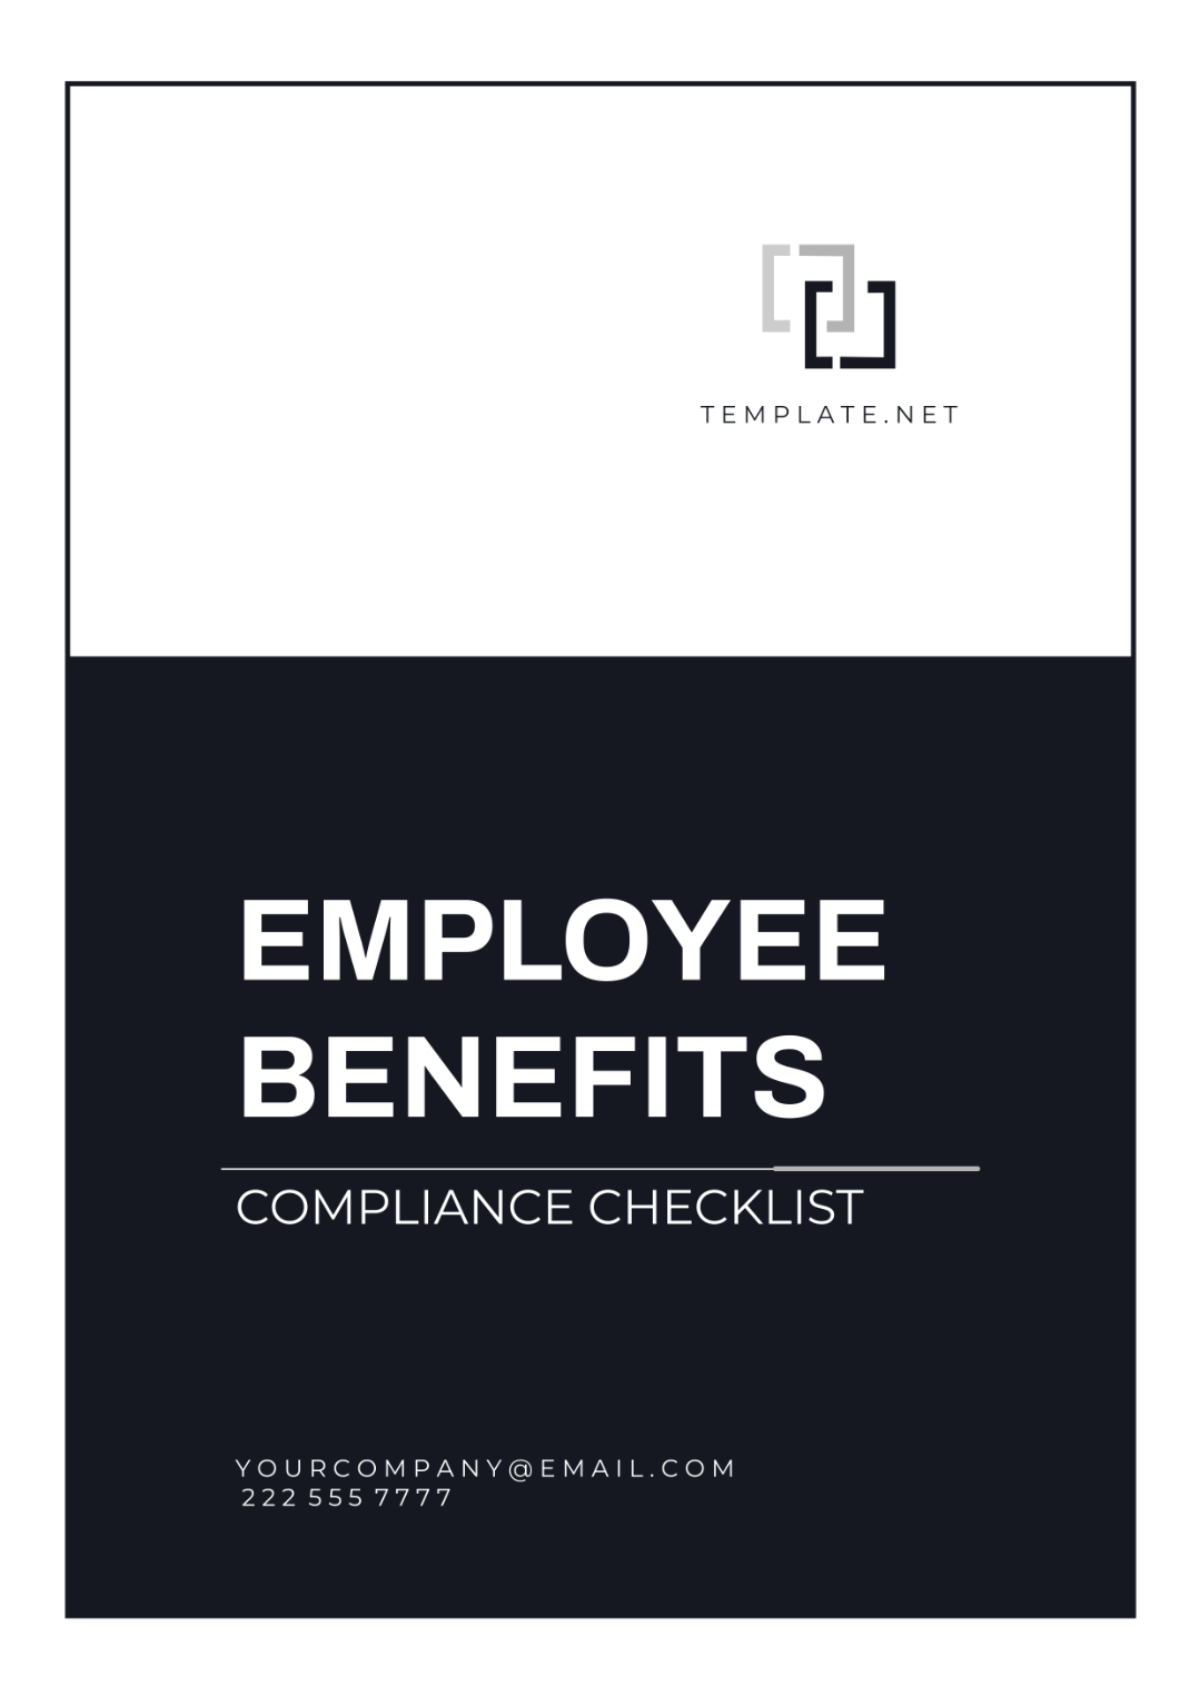 Employee Benefits Compliance Checklist Template